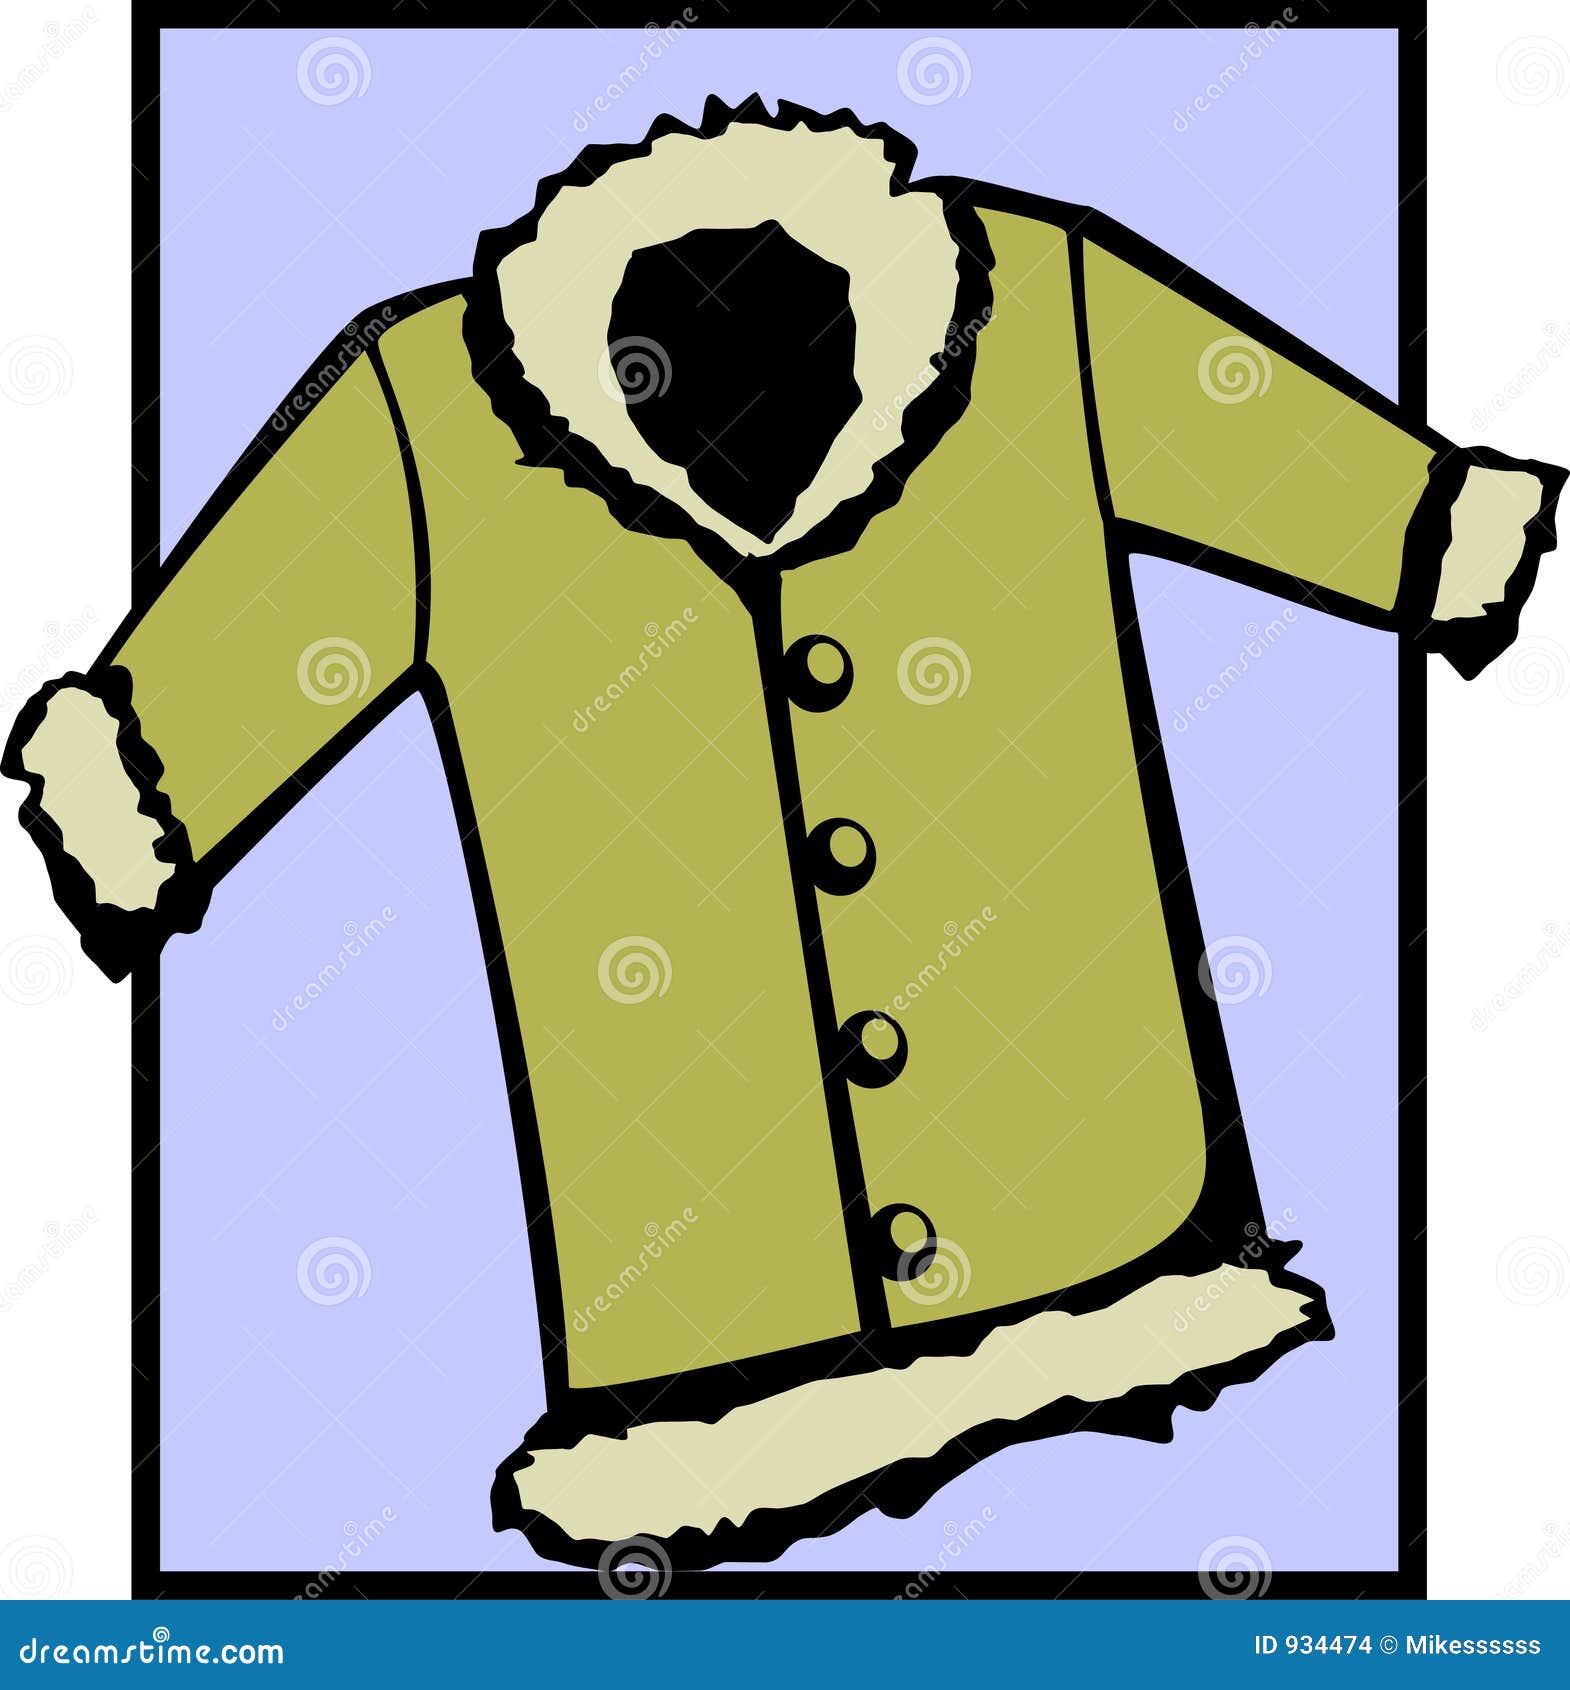 winter jacket clipart - photo #22